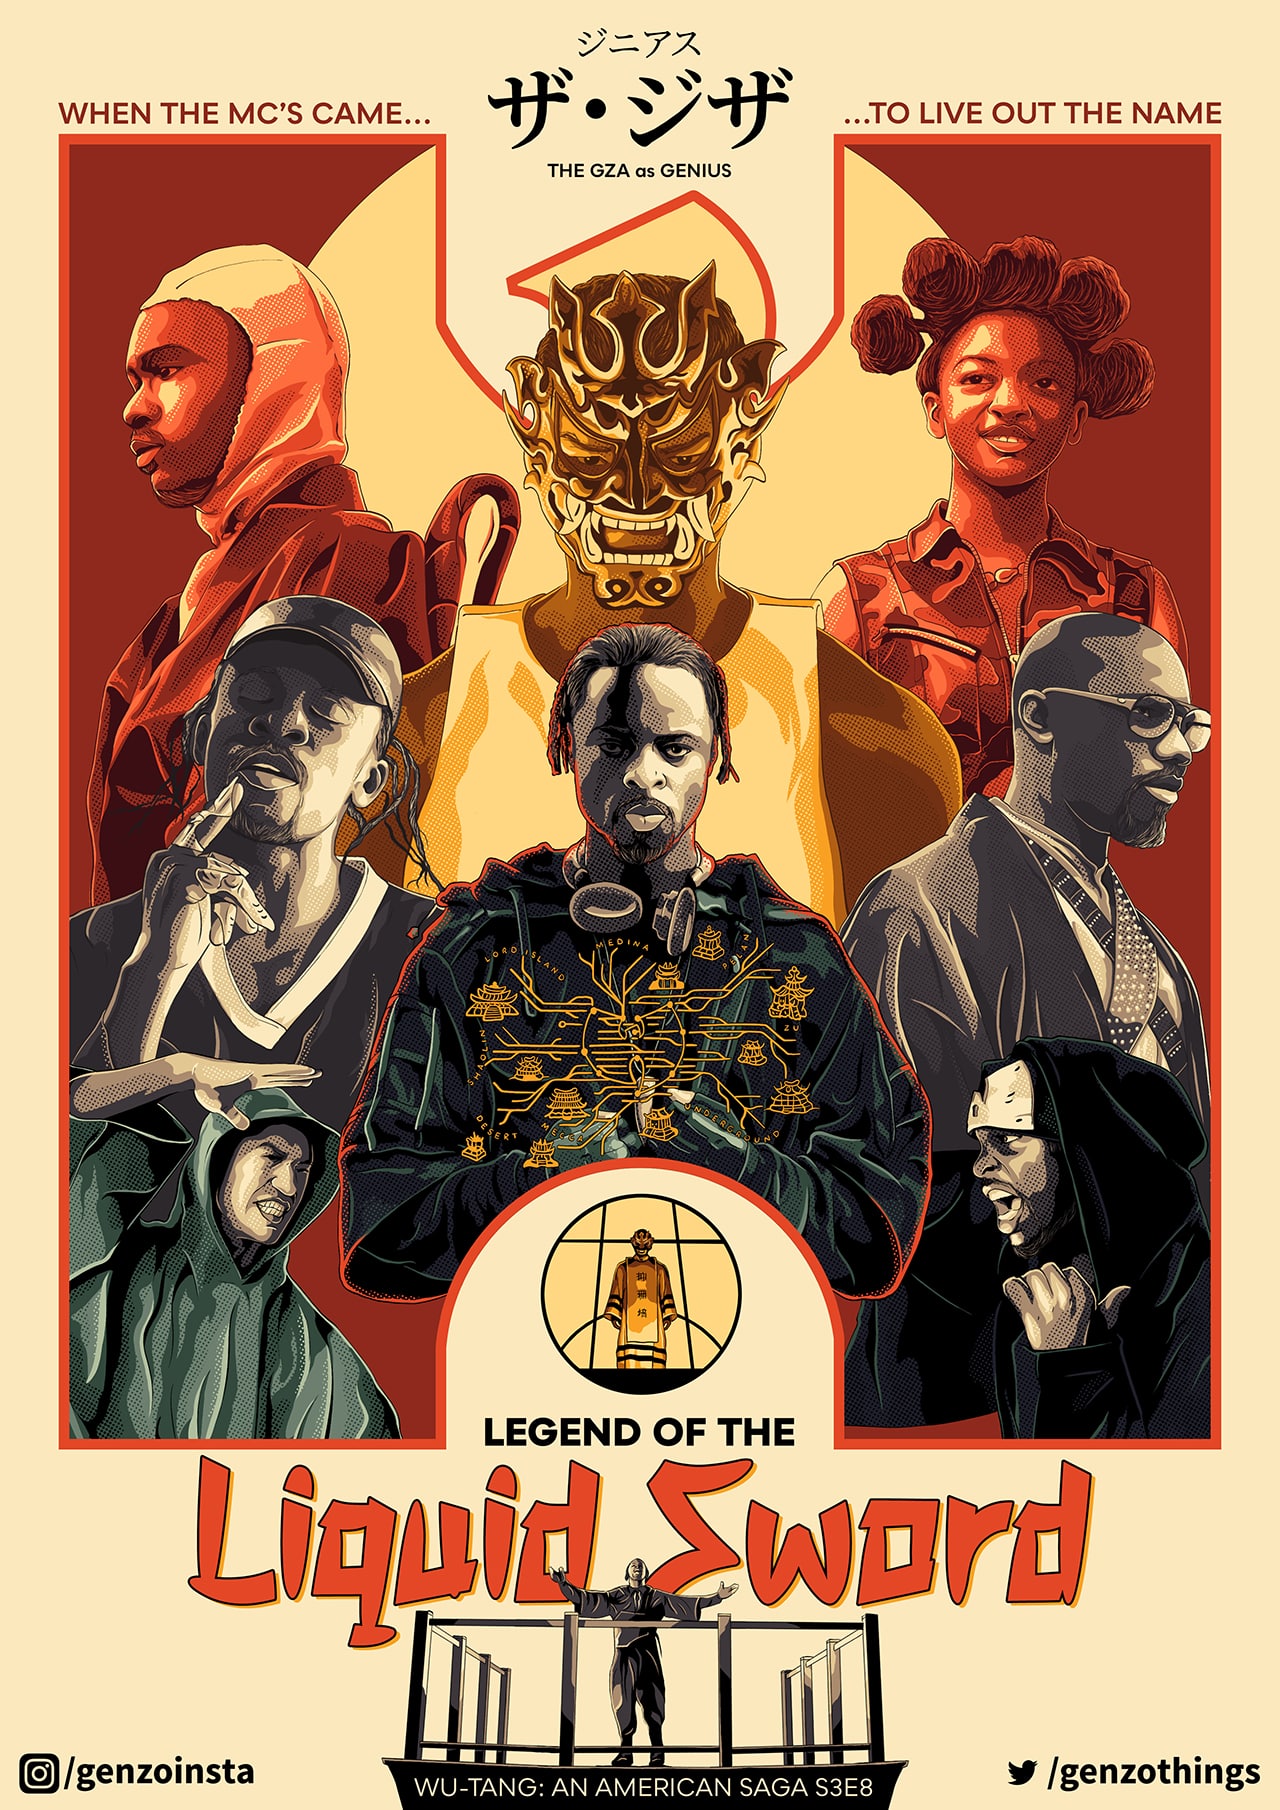 Wu-Tang: An American Saga S3E8 – The Legend of the Liquid Sword